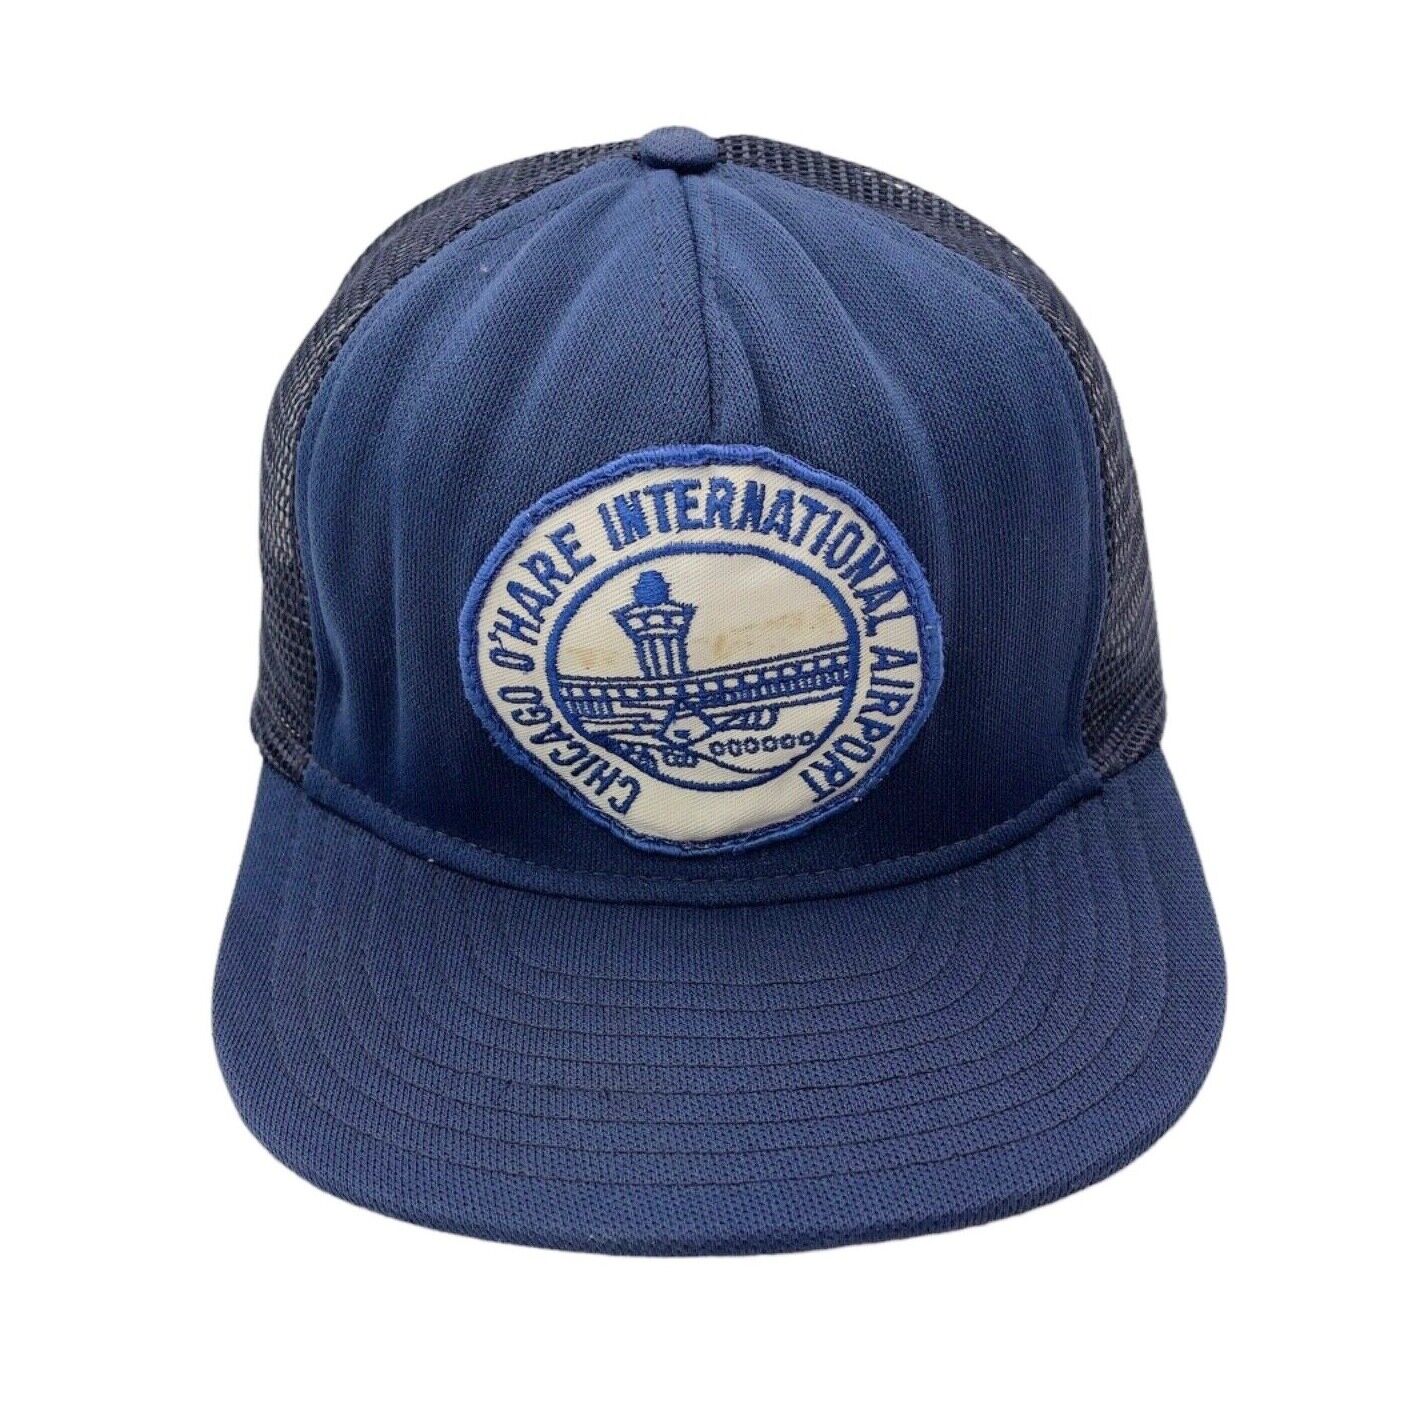 Vintage Chicago O'Hare International Airport Snap Back Cap Trucker Hat Blue